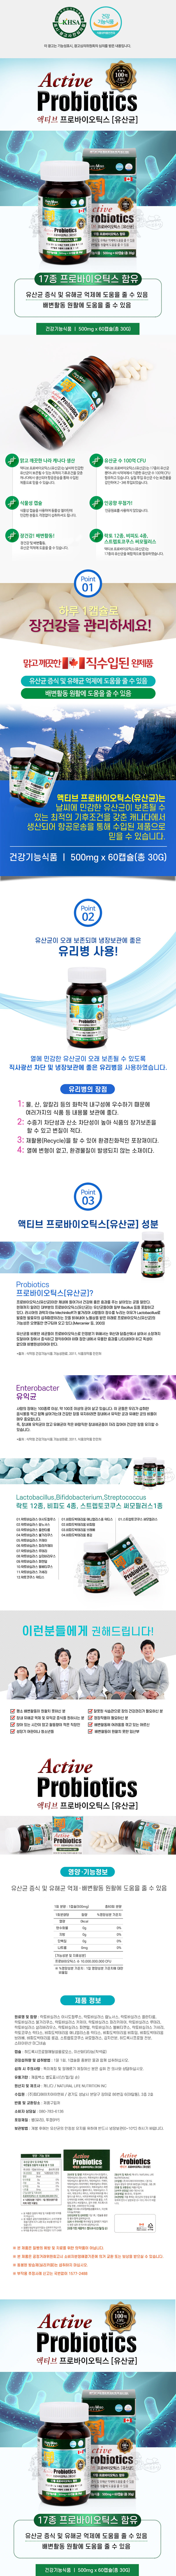 harumiso_active_probiotics_bbs_750.jpg